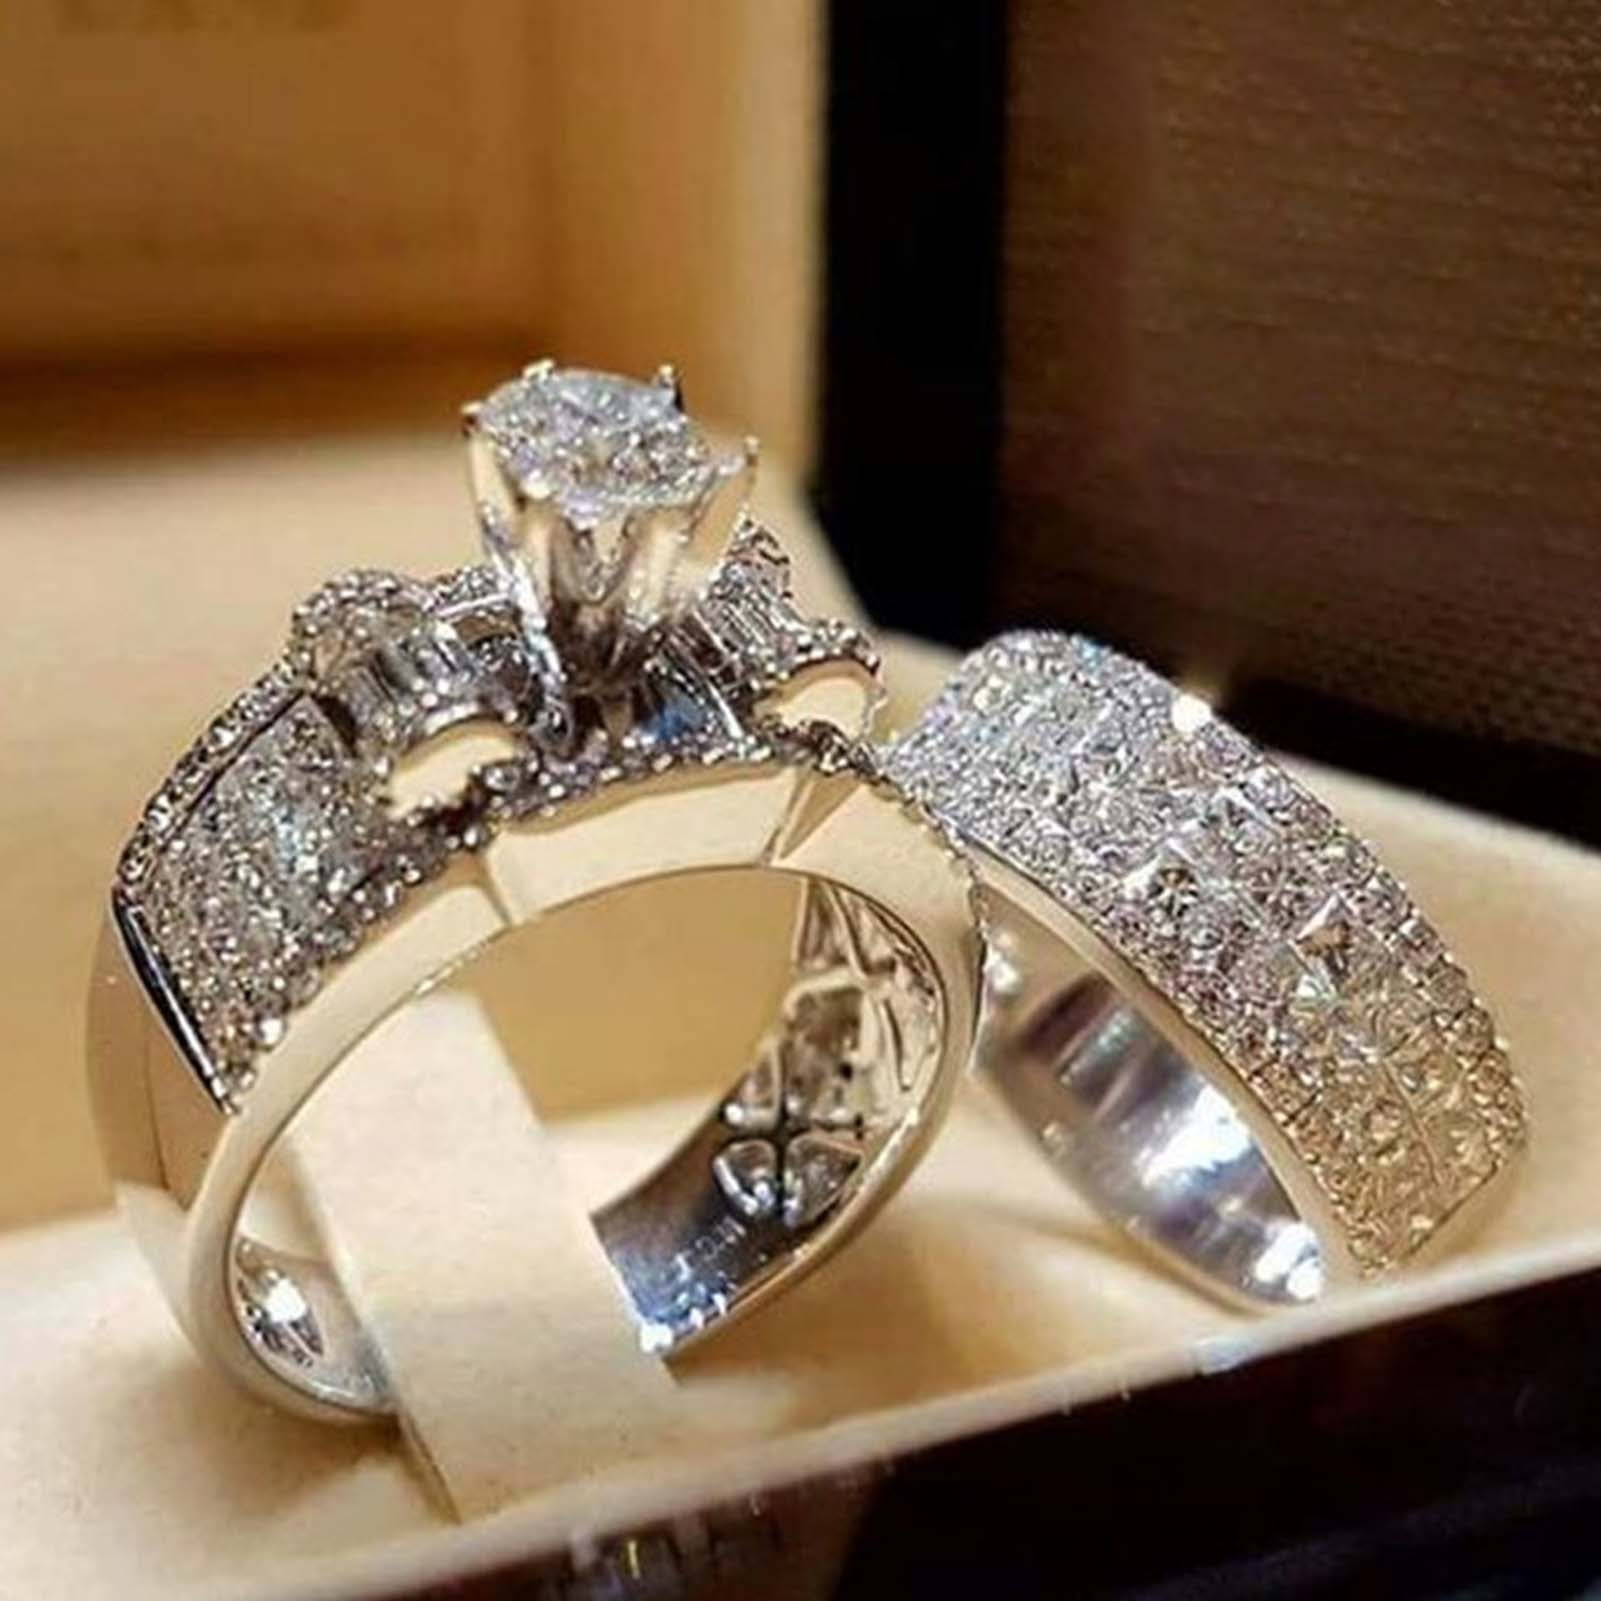 Ladies' Yellow Gold Wedding Ring with Three Diamonds | KLENOTA